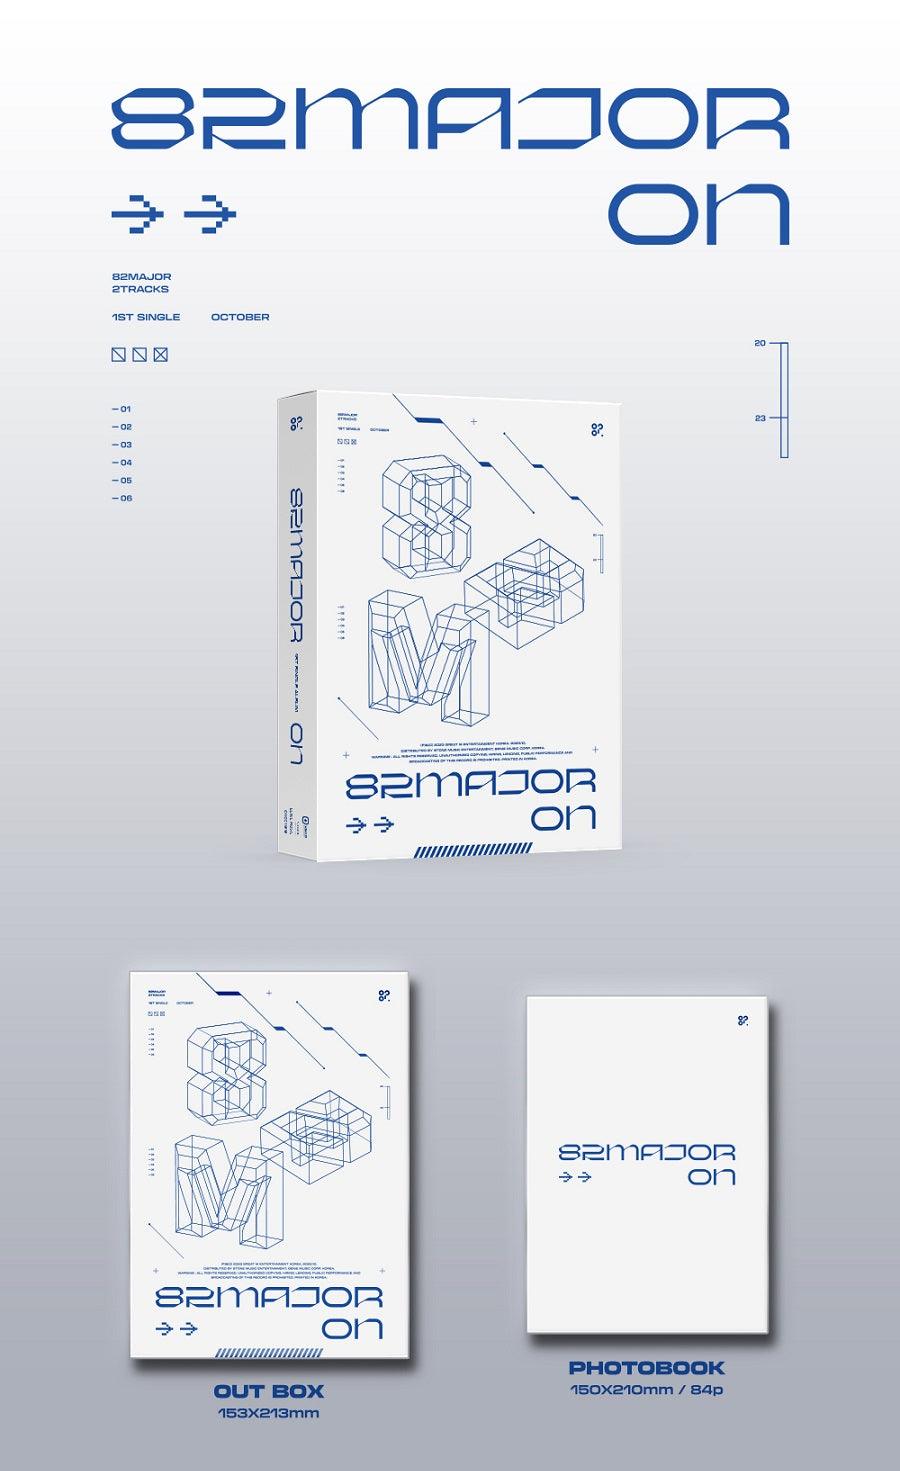 82MAJOR- Single Album Vol.01 [ON] - KAEPJJANG SHOP (캡짱 숍)